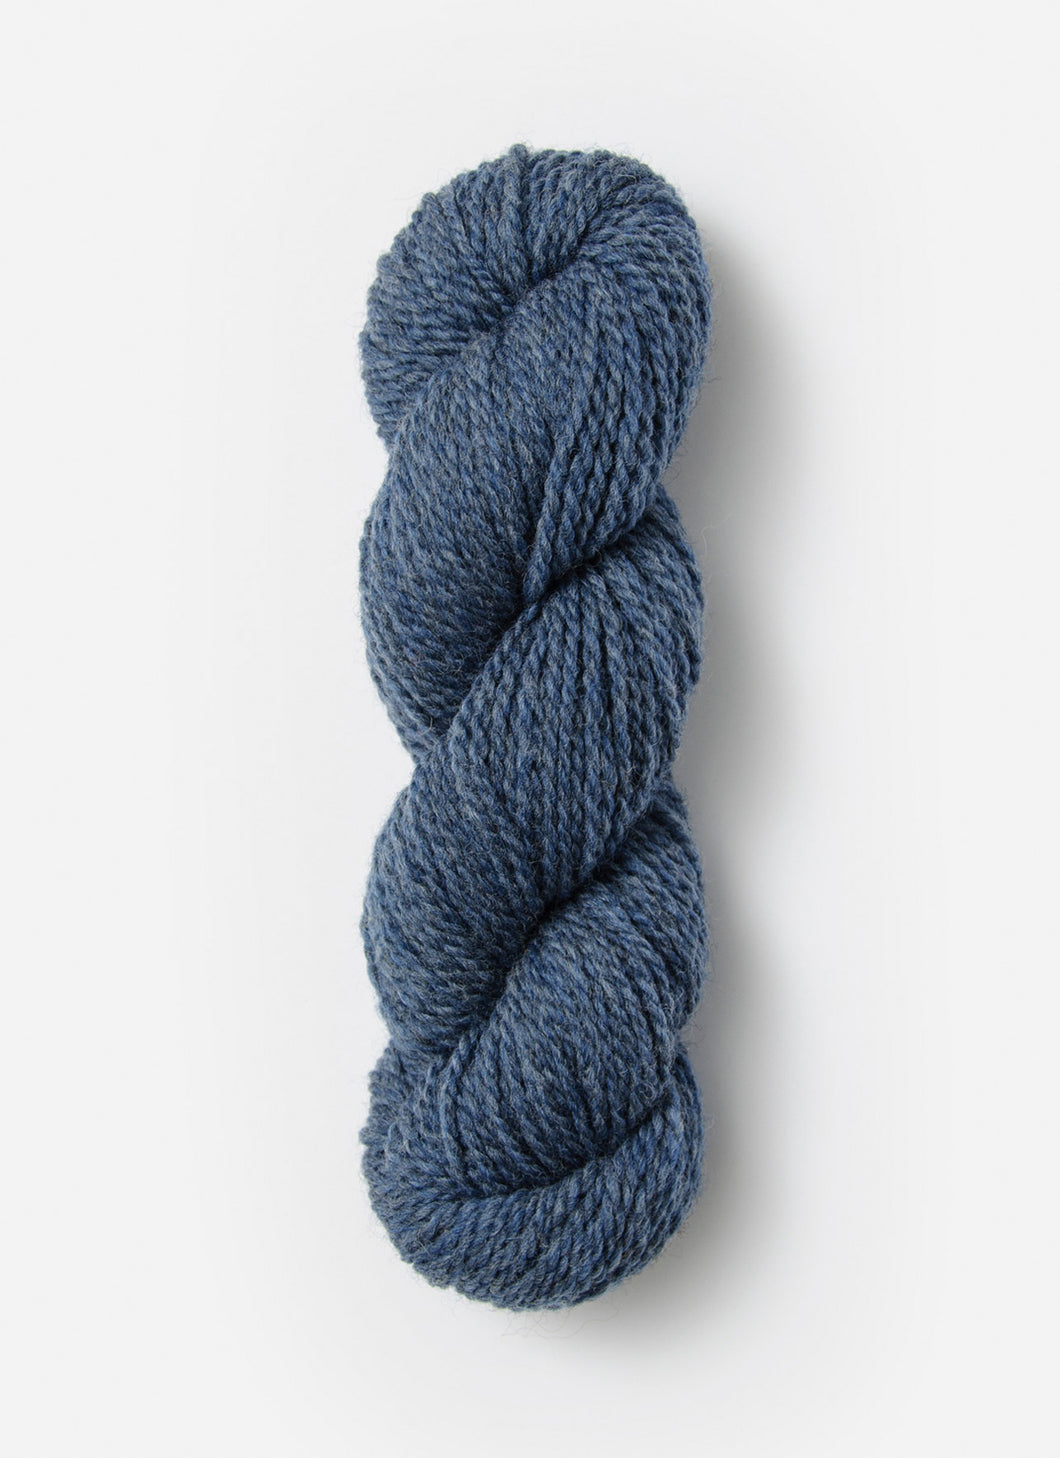 Woolstok 150g | Blue Sky Fibers